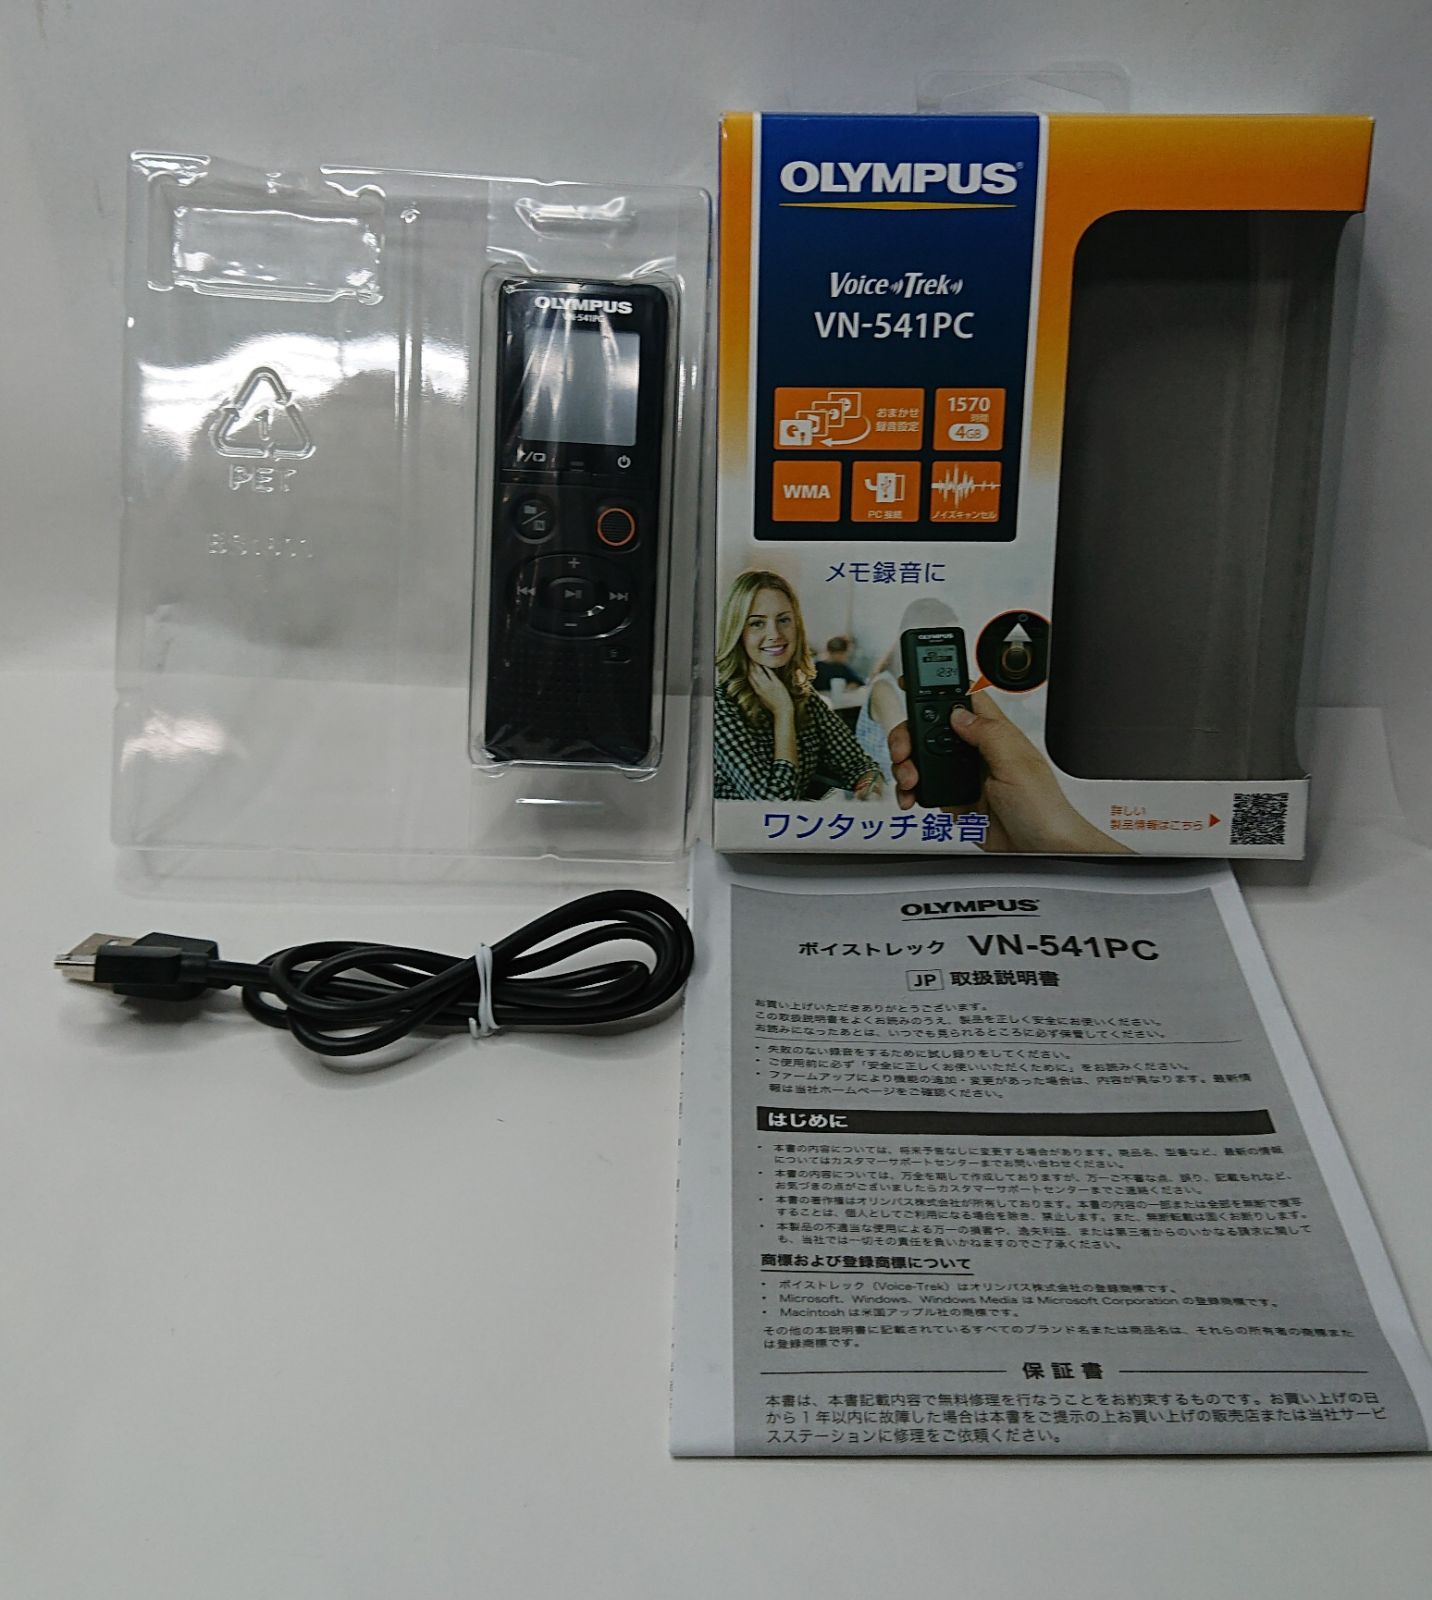 OLYMPUS ICレコーダー VoiceTrek VN-541PC - Shop C - メルカリ